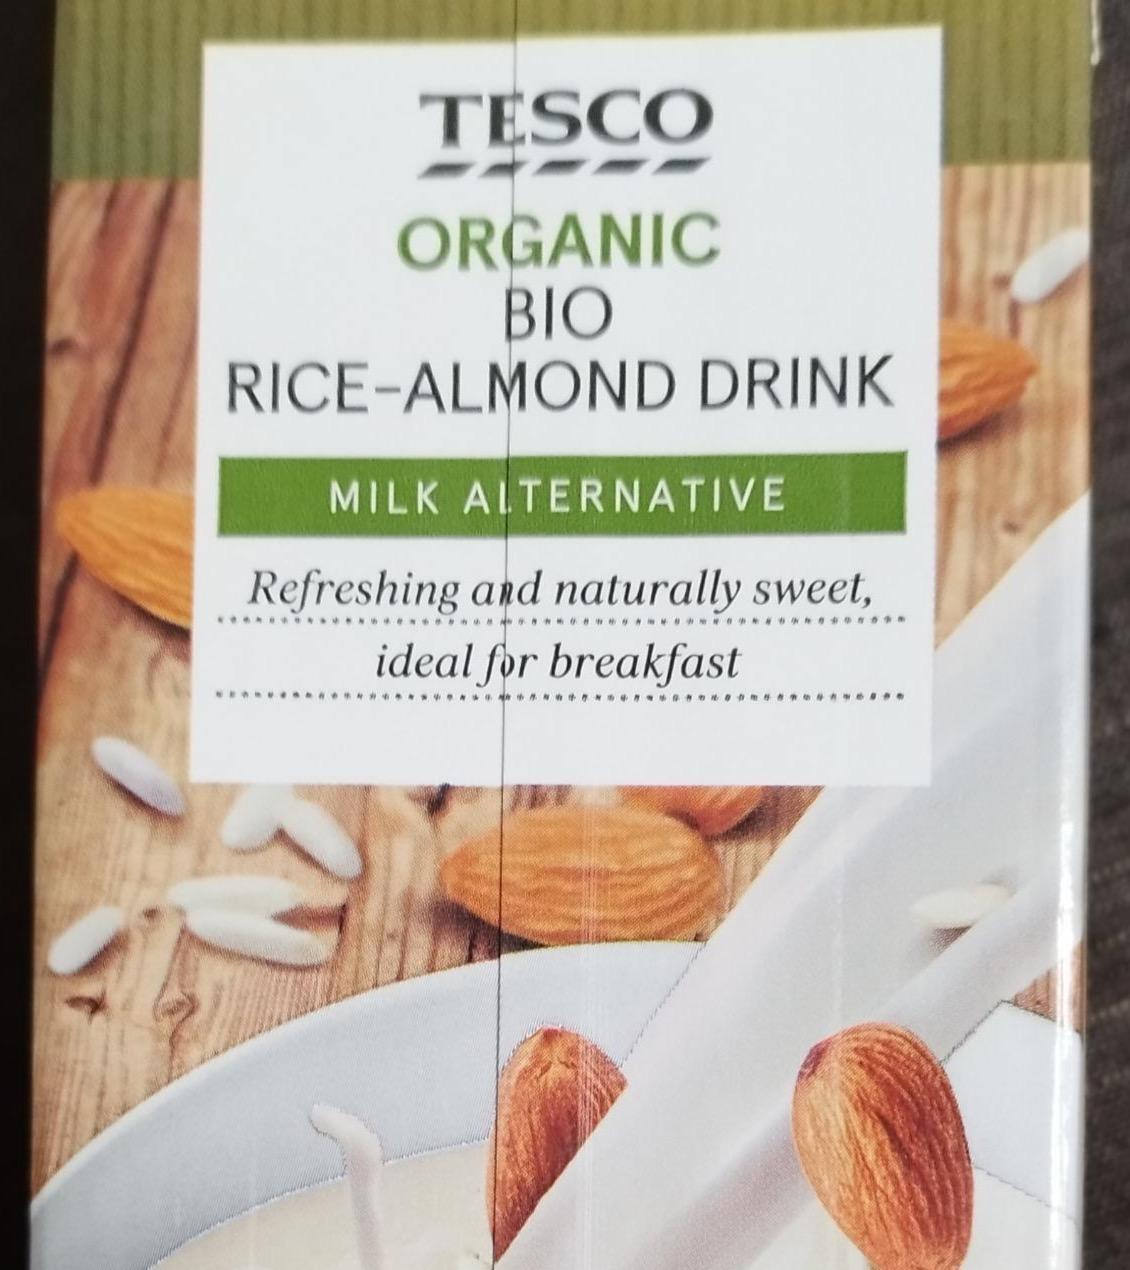 Képek - Organic Bio rice-almond drink Tesco